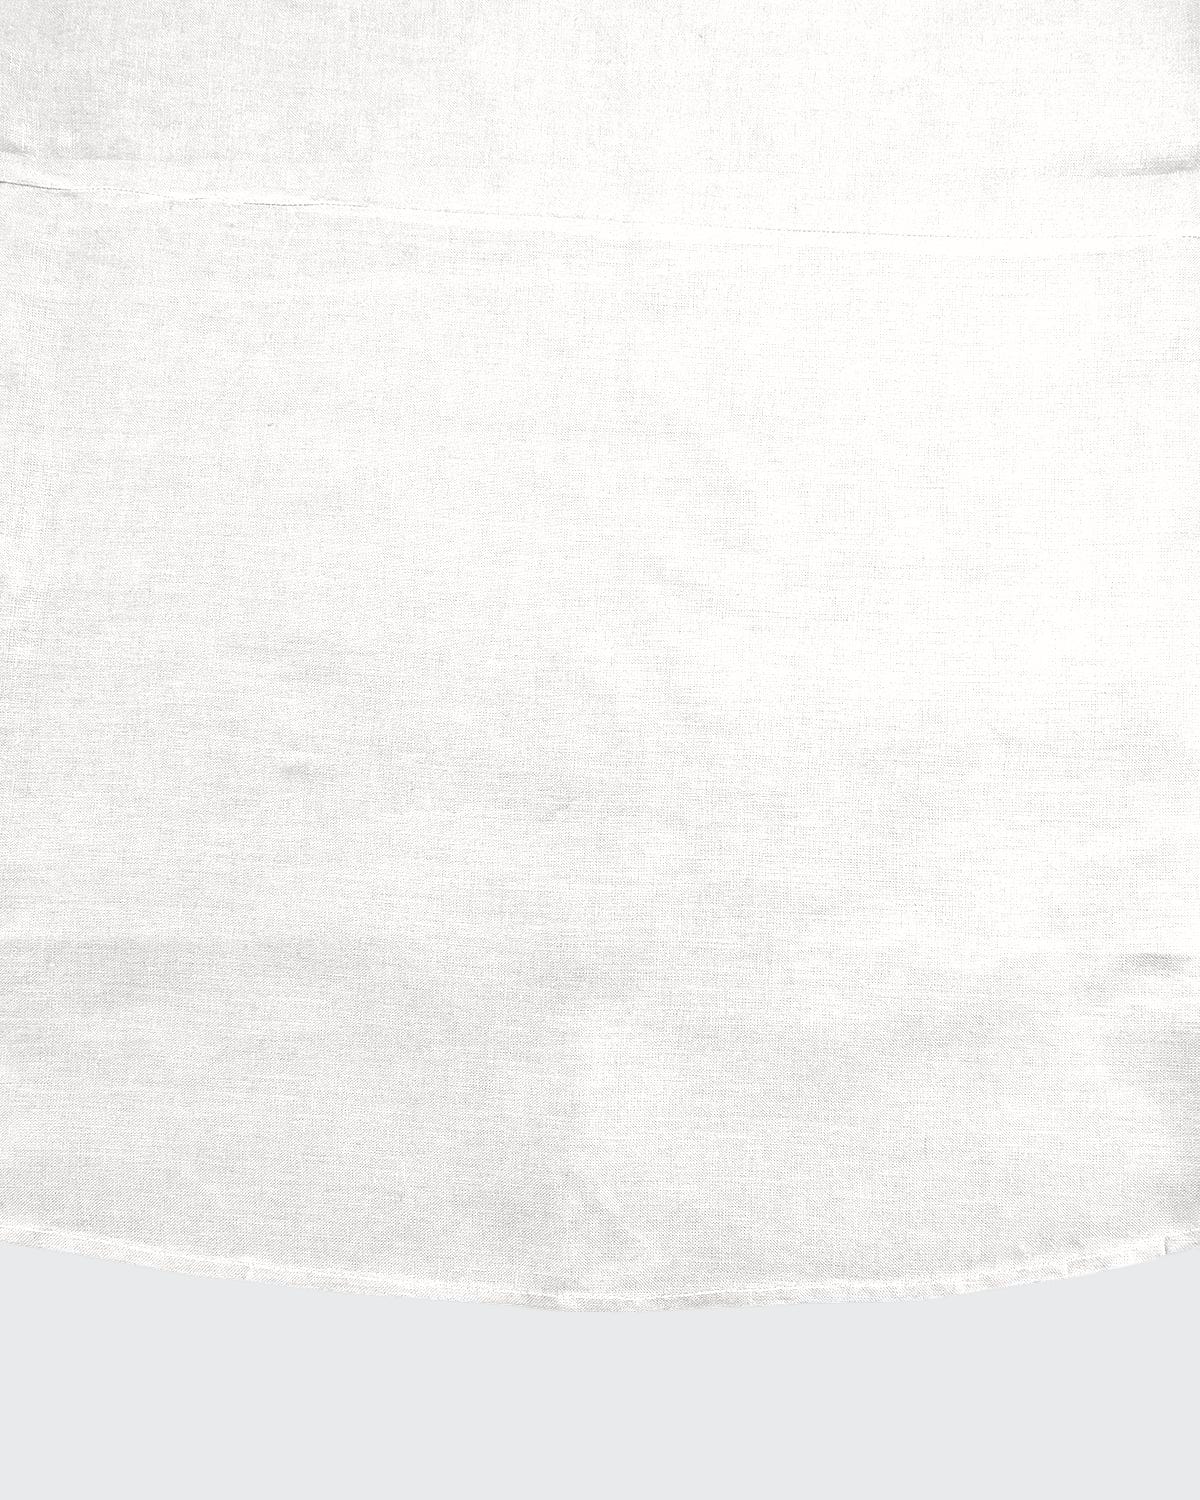 Sferra Hemstitch Round Tablecloth, 90"dia. In White